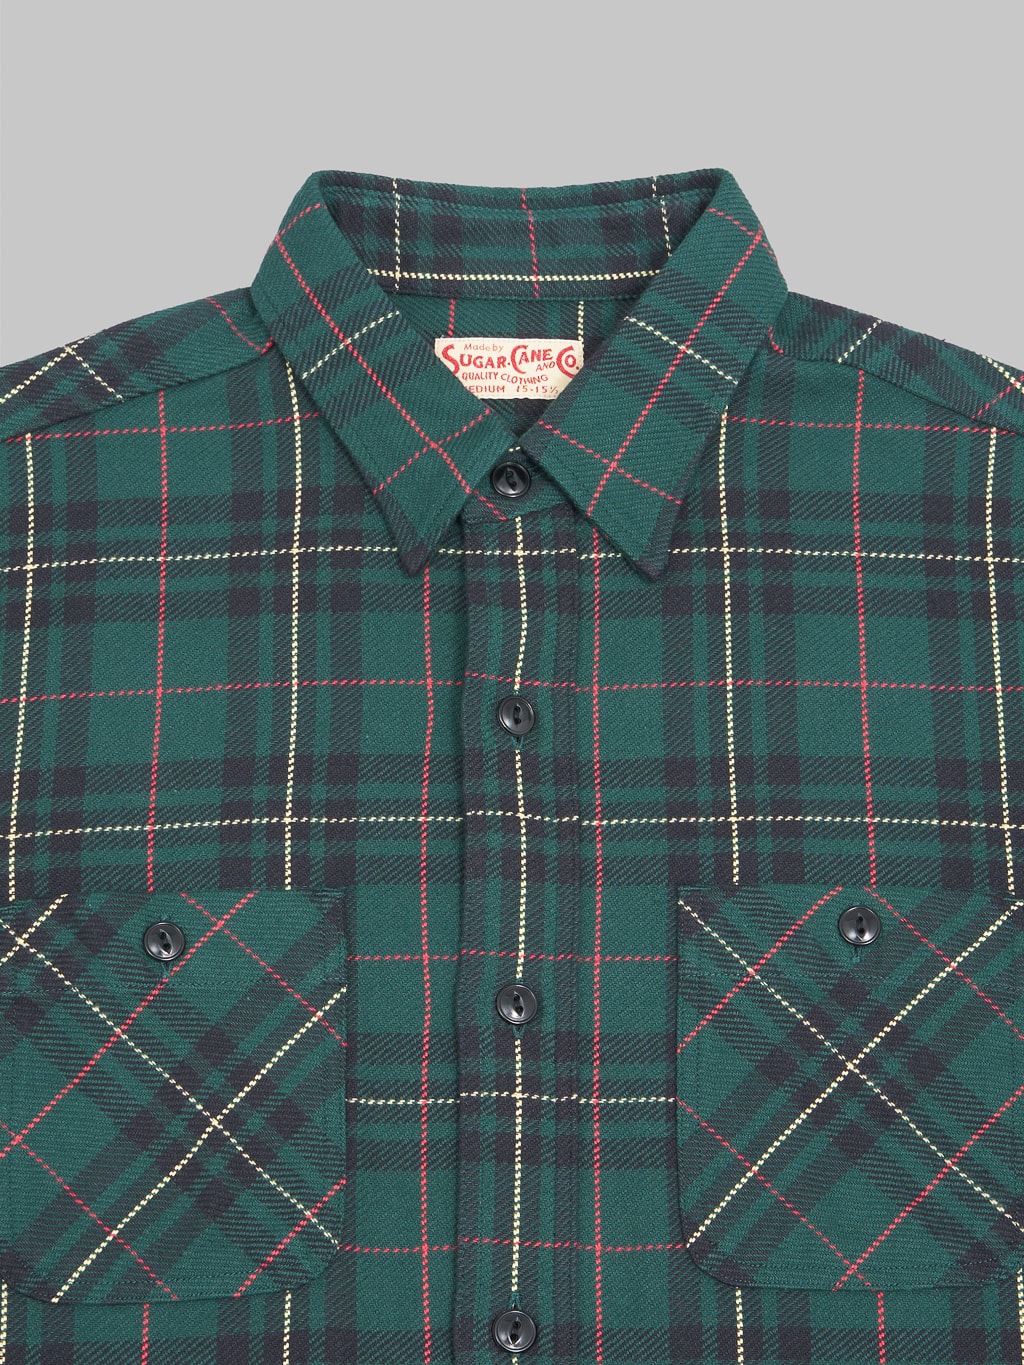 Sugar Cane Twill Check Flannel Shirt green front pocket